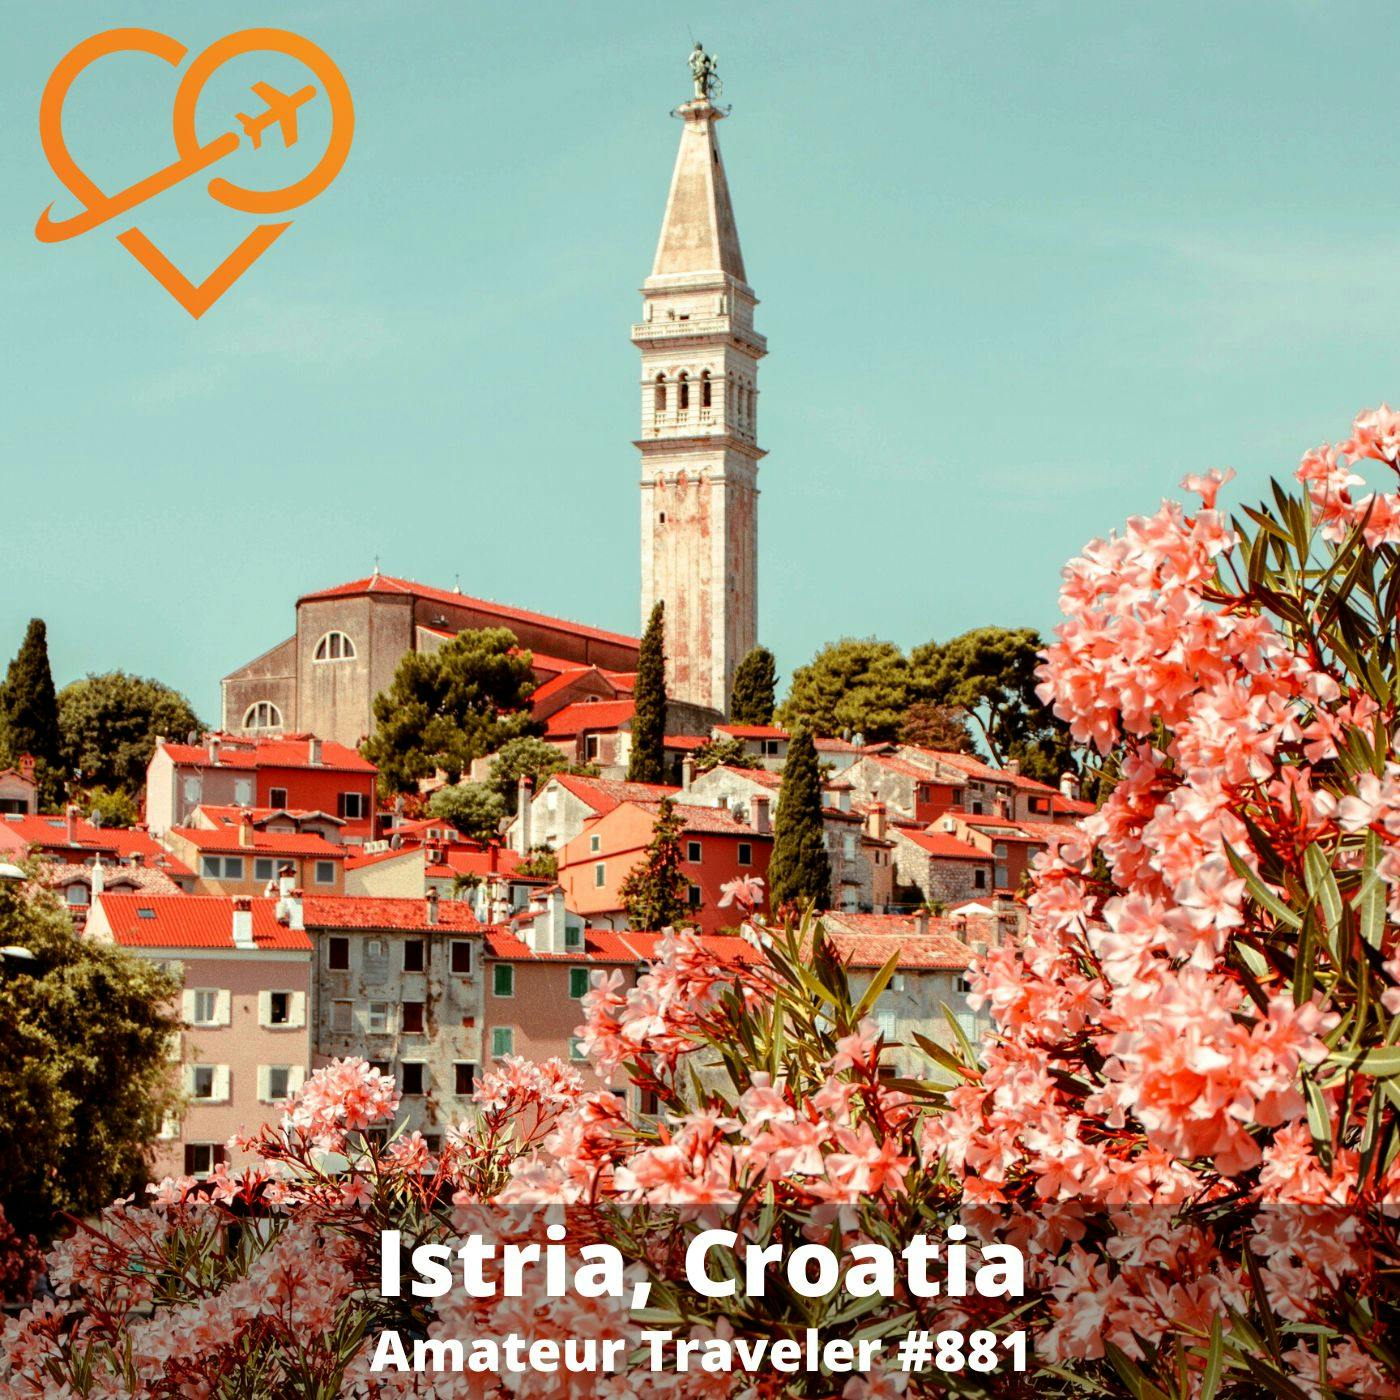 AT#881 - Travel to Croatia’s Istrian Peninsula